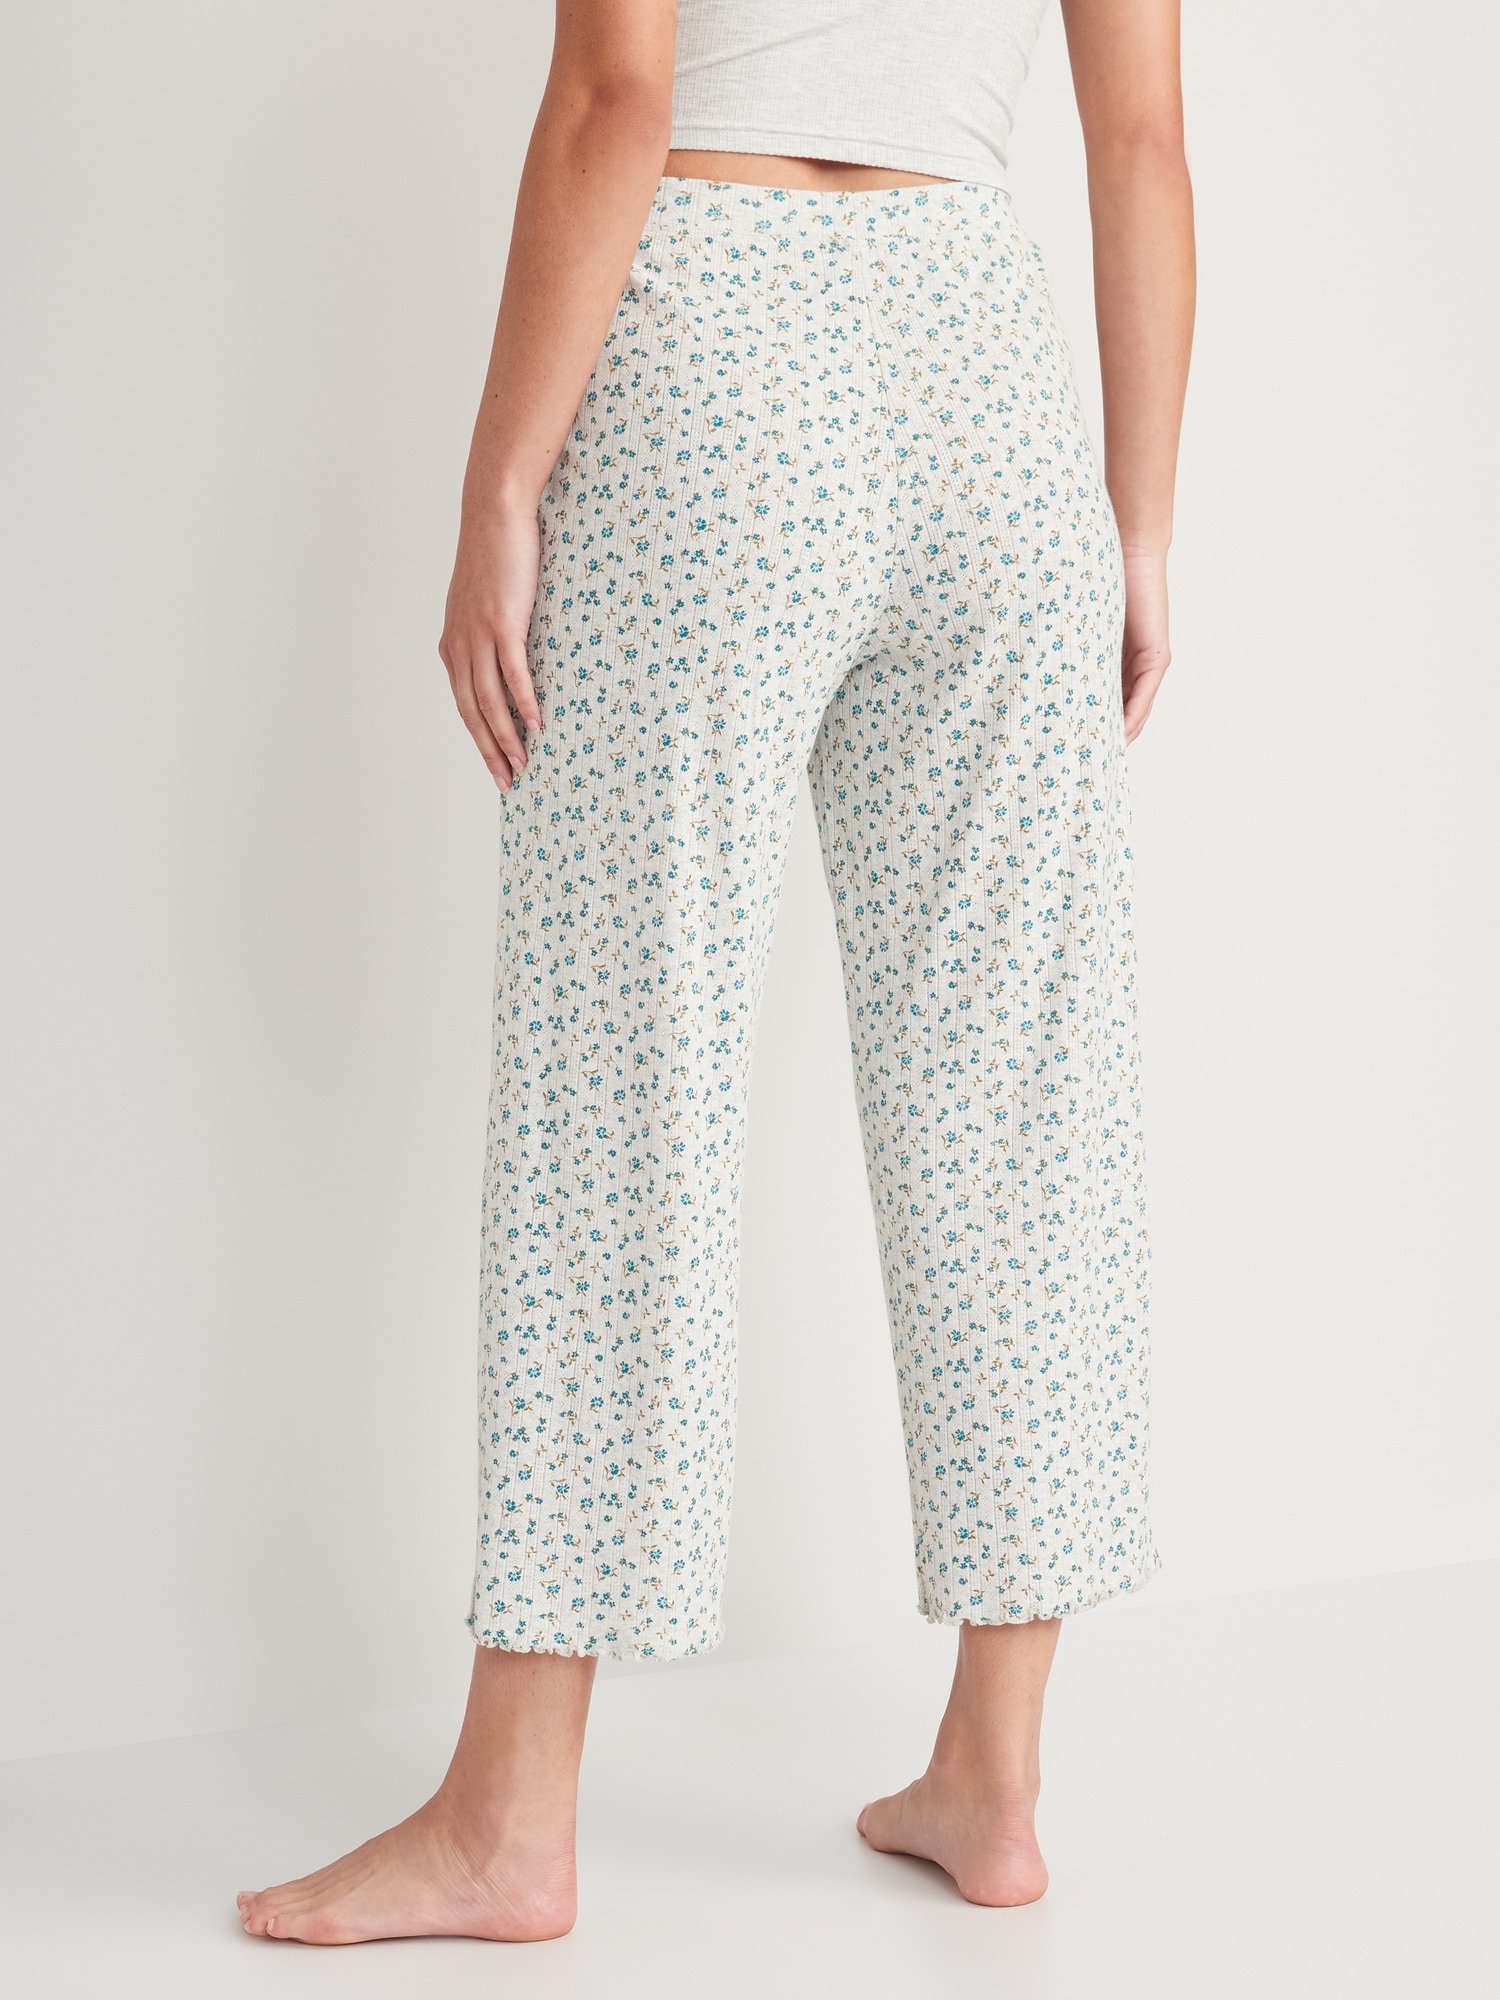 Knit Pajama Pants for Women